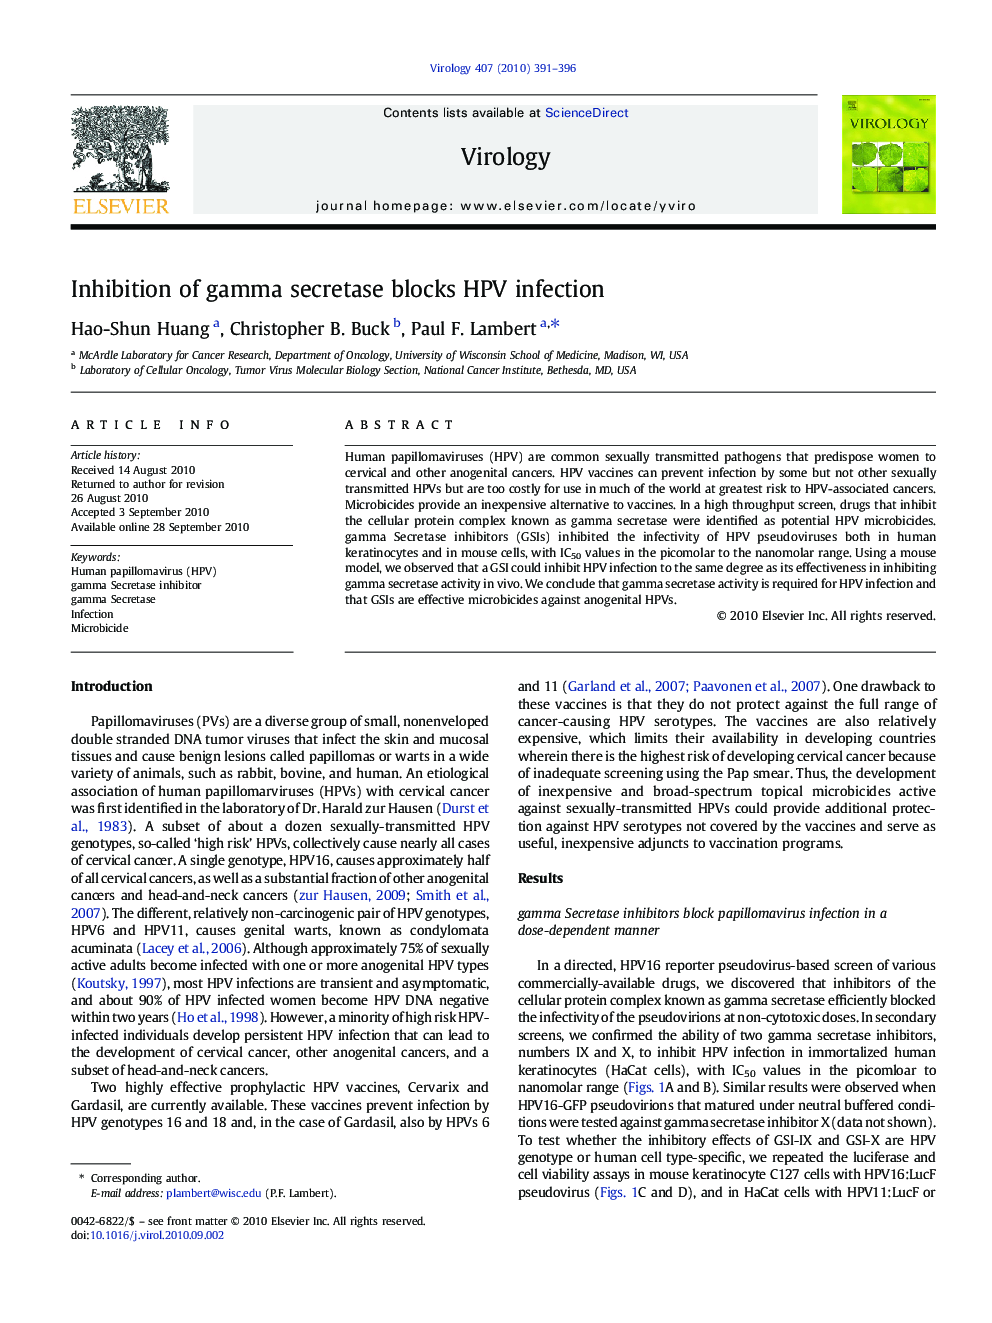 Inhibition of gamma secretase blocks HPV infection